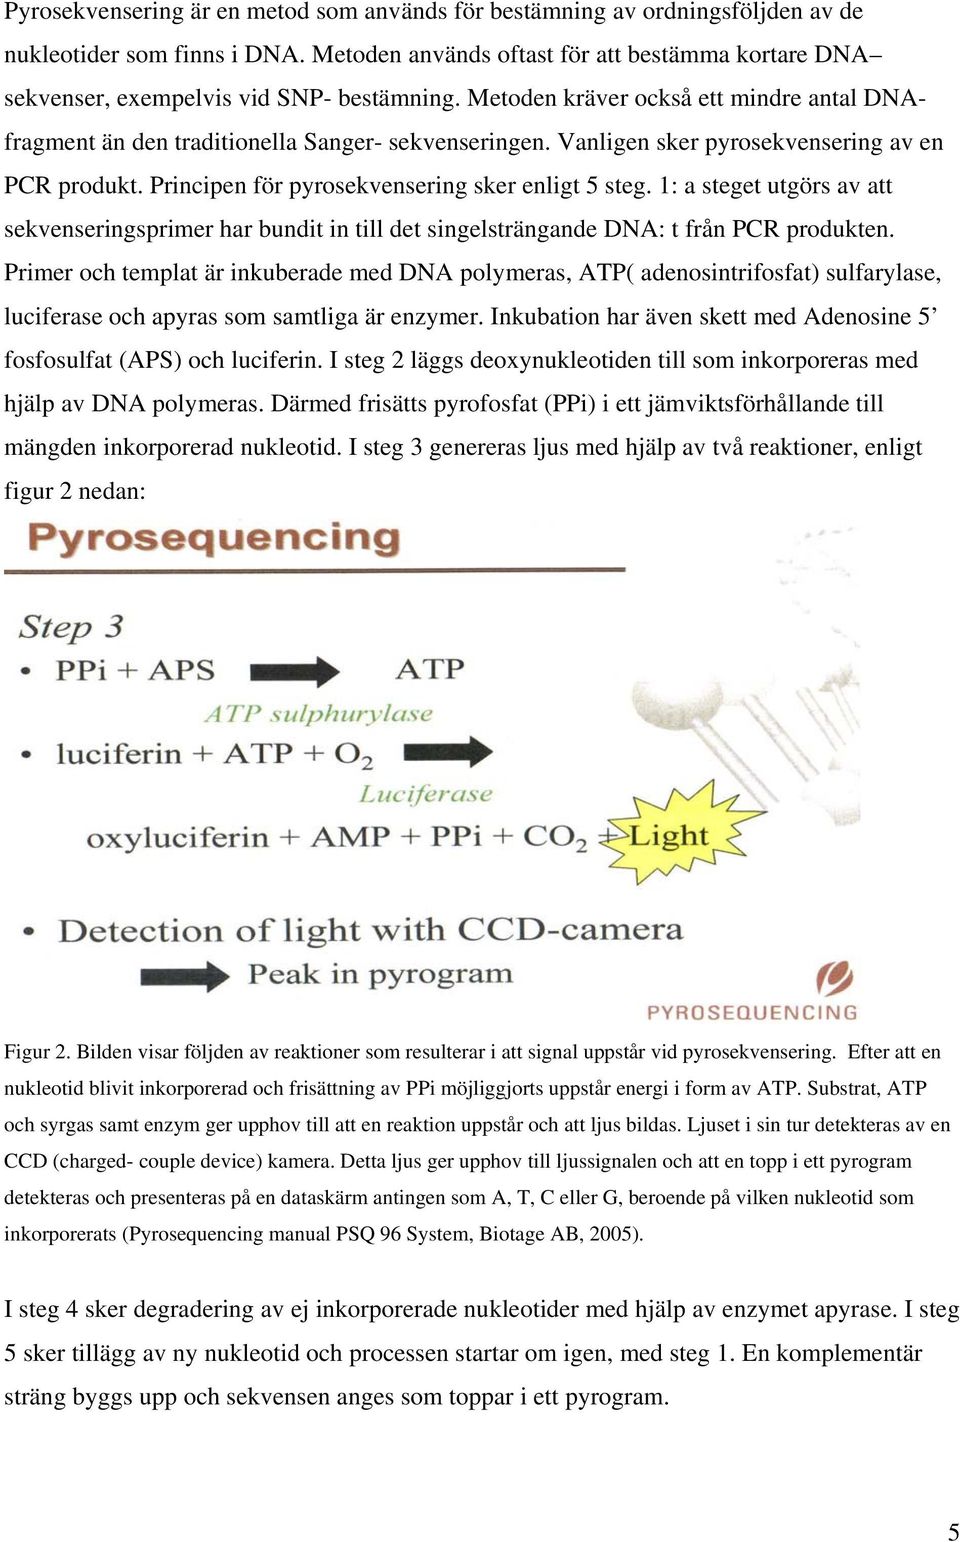 Vanligen sker pyrosekvensering av en PCR produkt. Principen för pyrosekvensering sker enligt 5 steg.